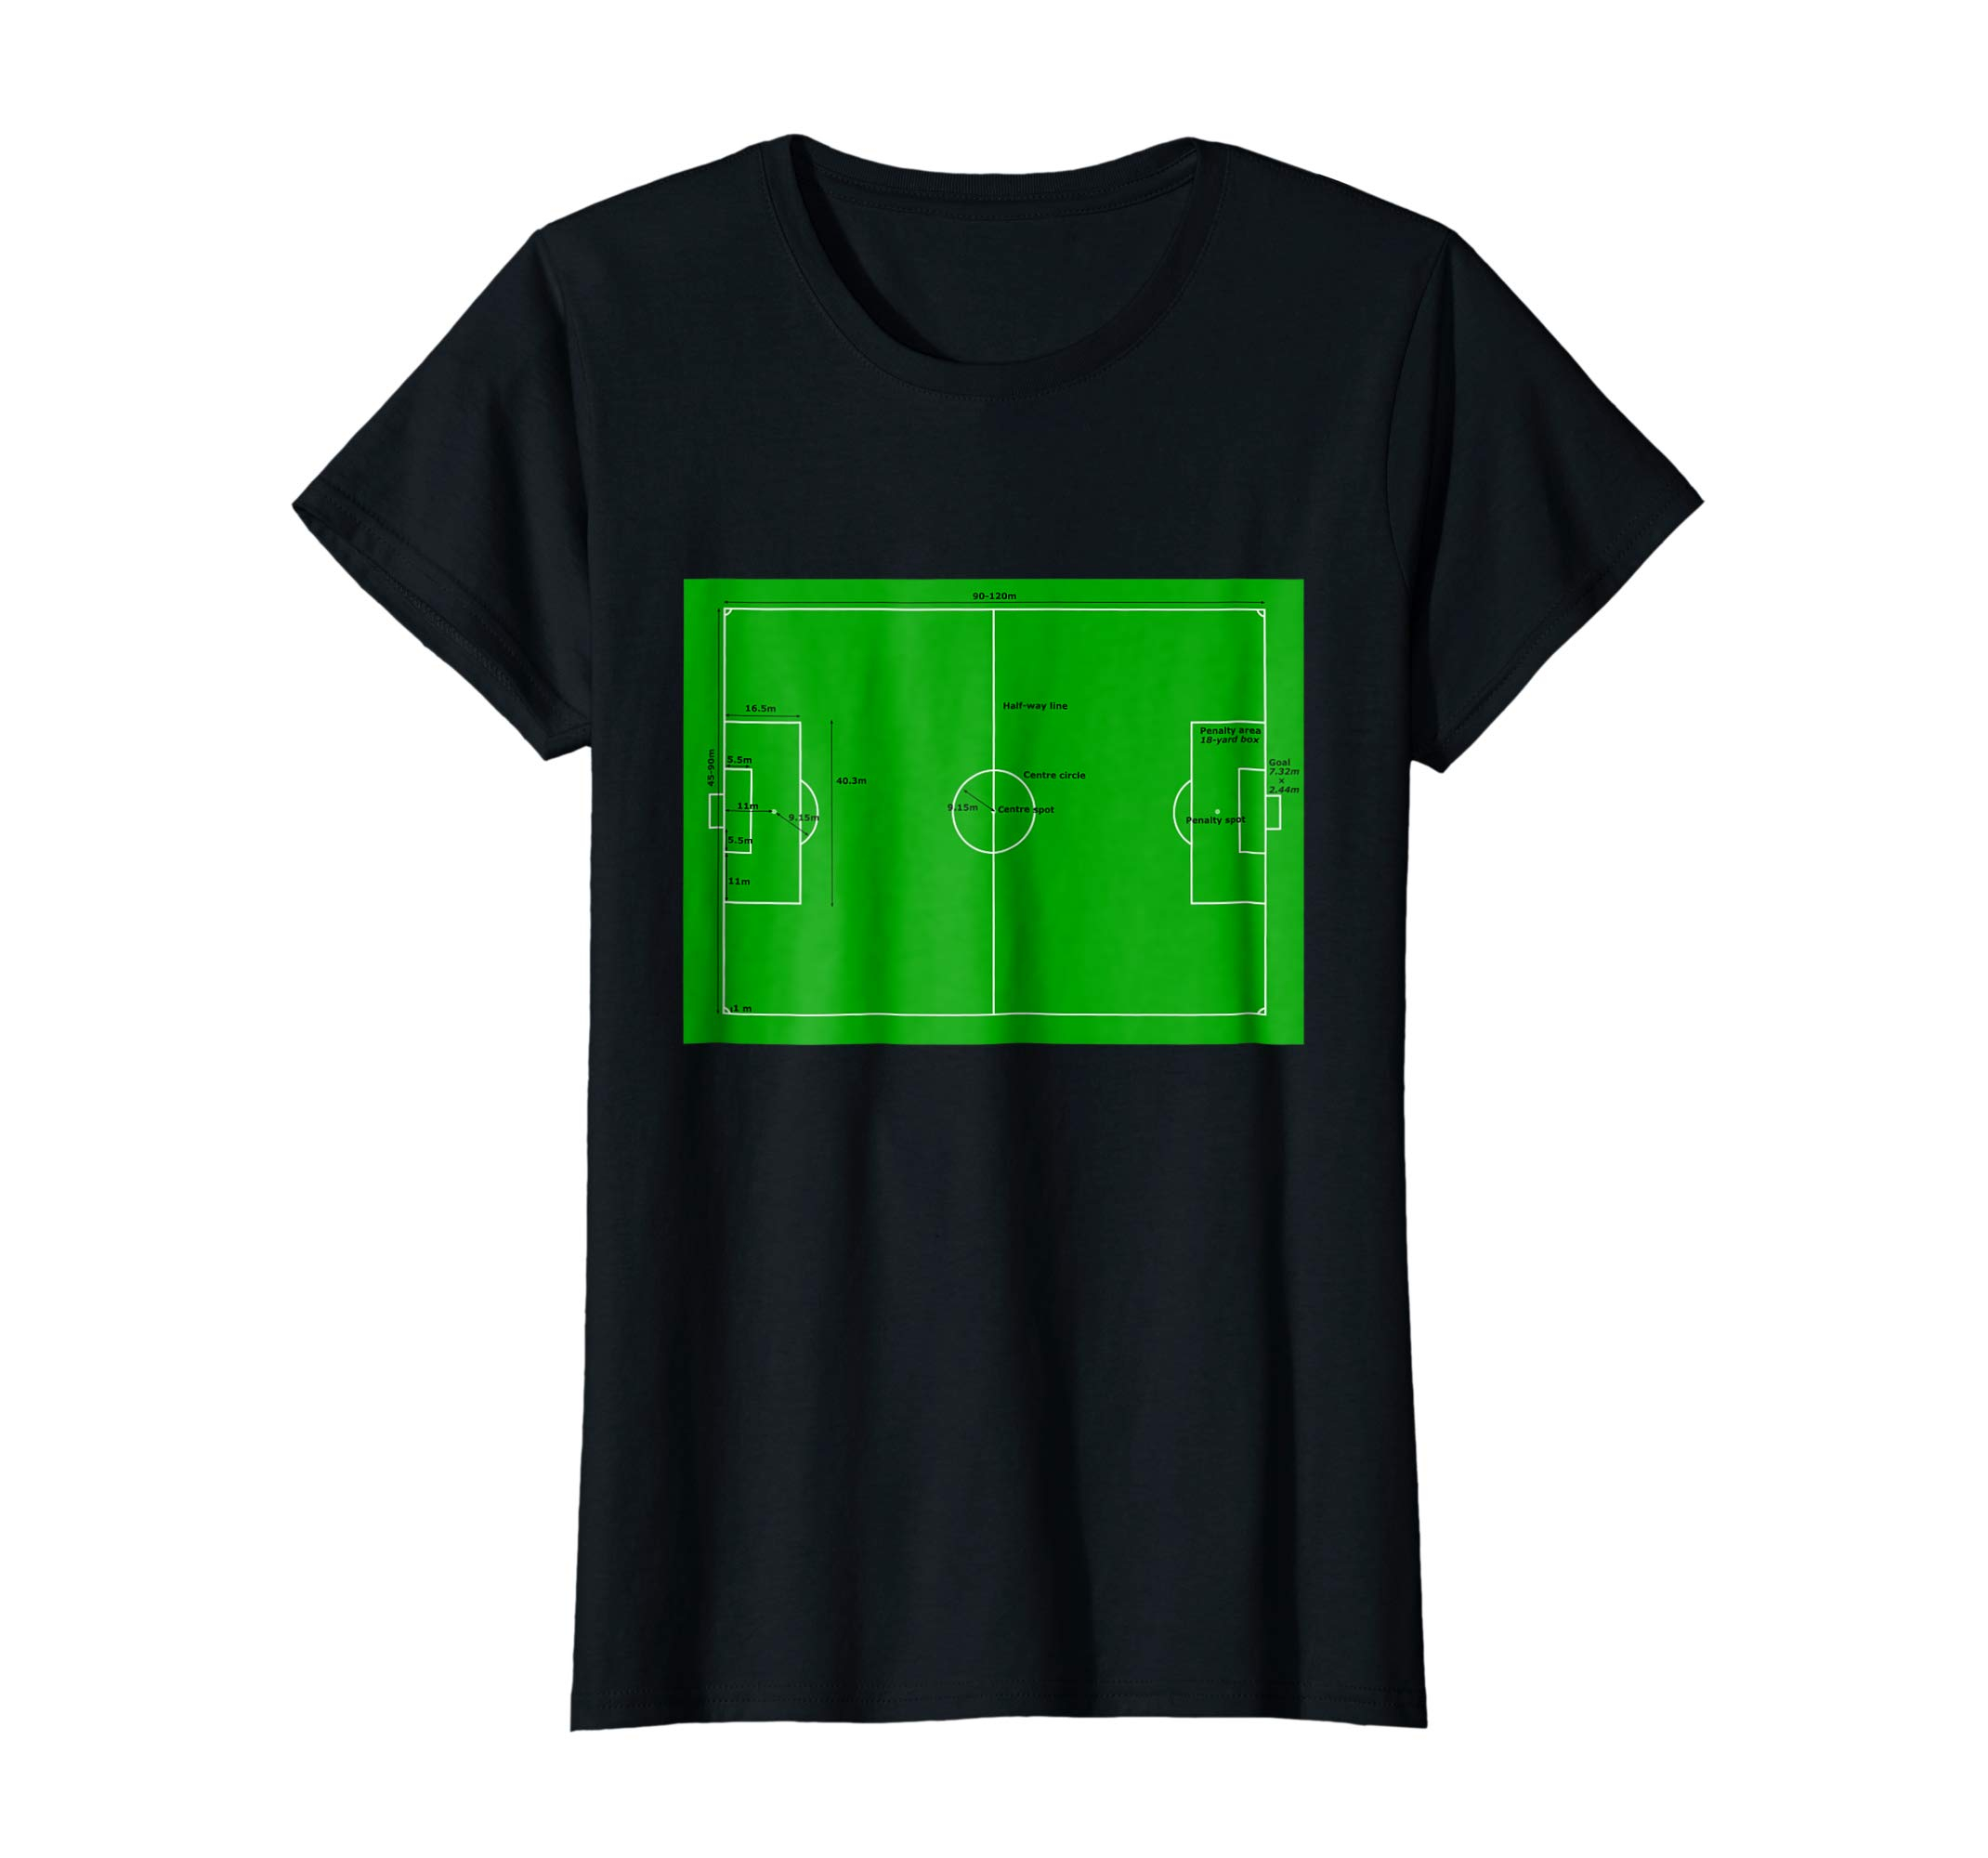 Soccer Field Diagram Amazon Soccer Field Diagram Lines Shirt Clothing